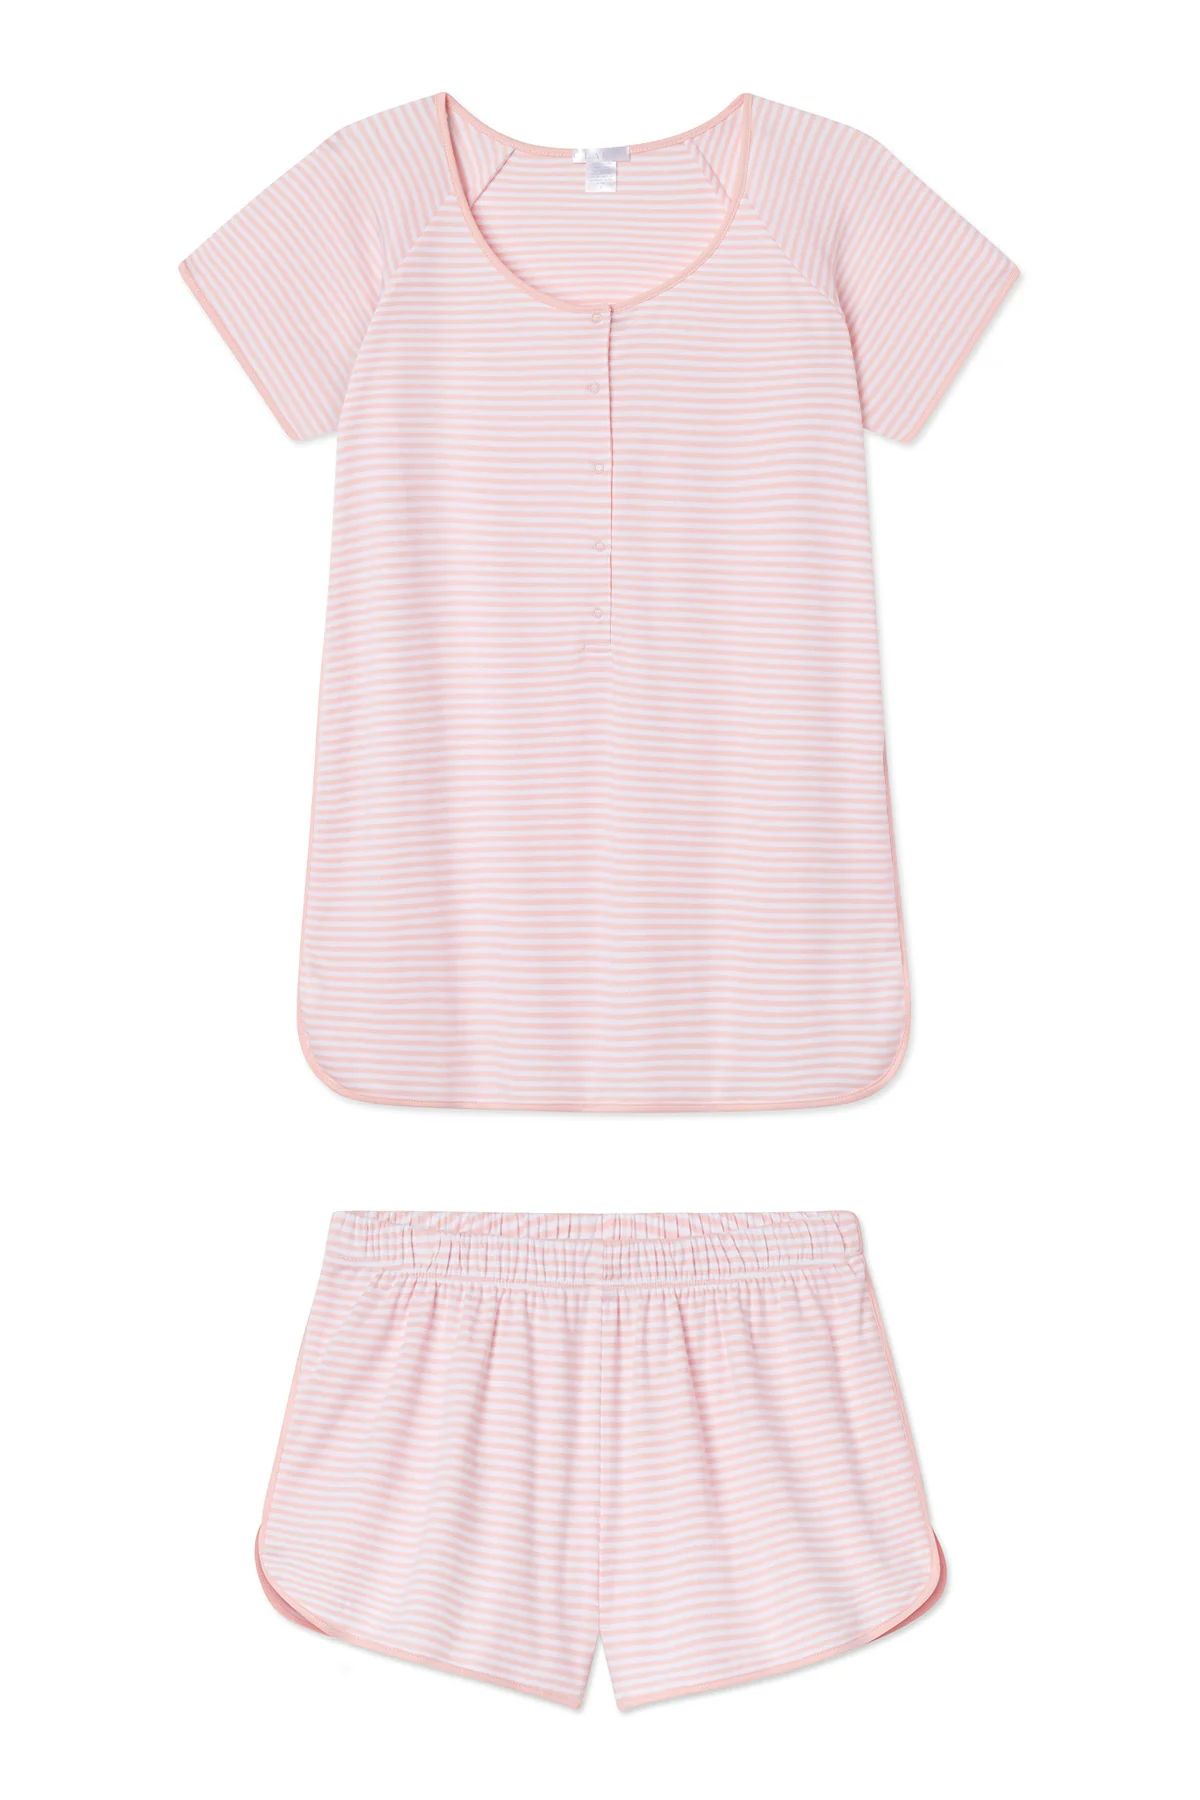 Pima Maternity Shorts Set in English Rose Stripe | Lake Pajamas